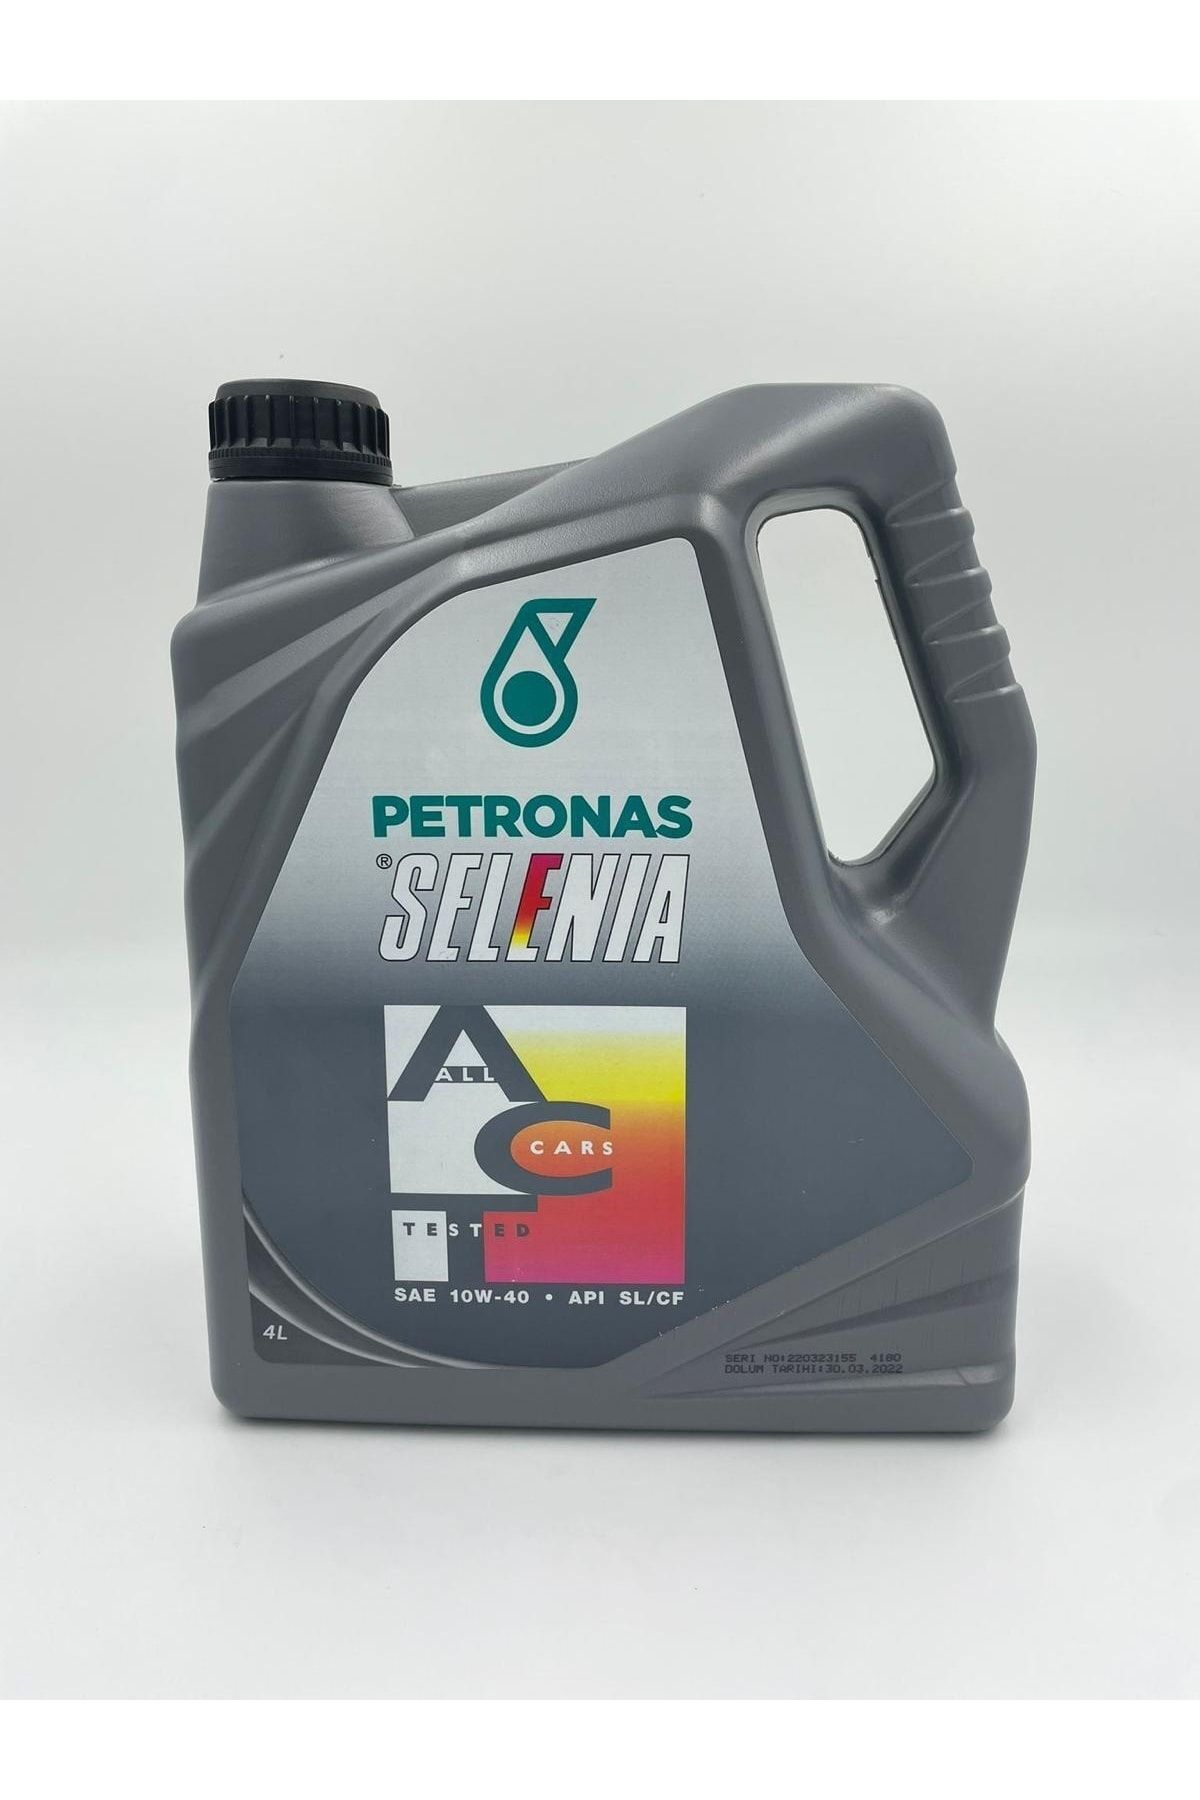 Petronas Selenıa Act Sae 10w-40 4lt